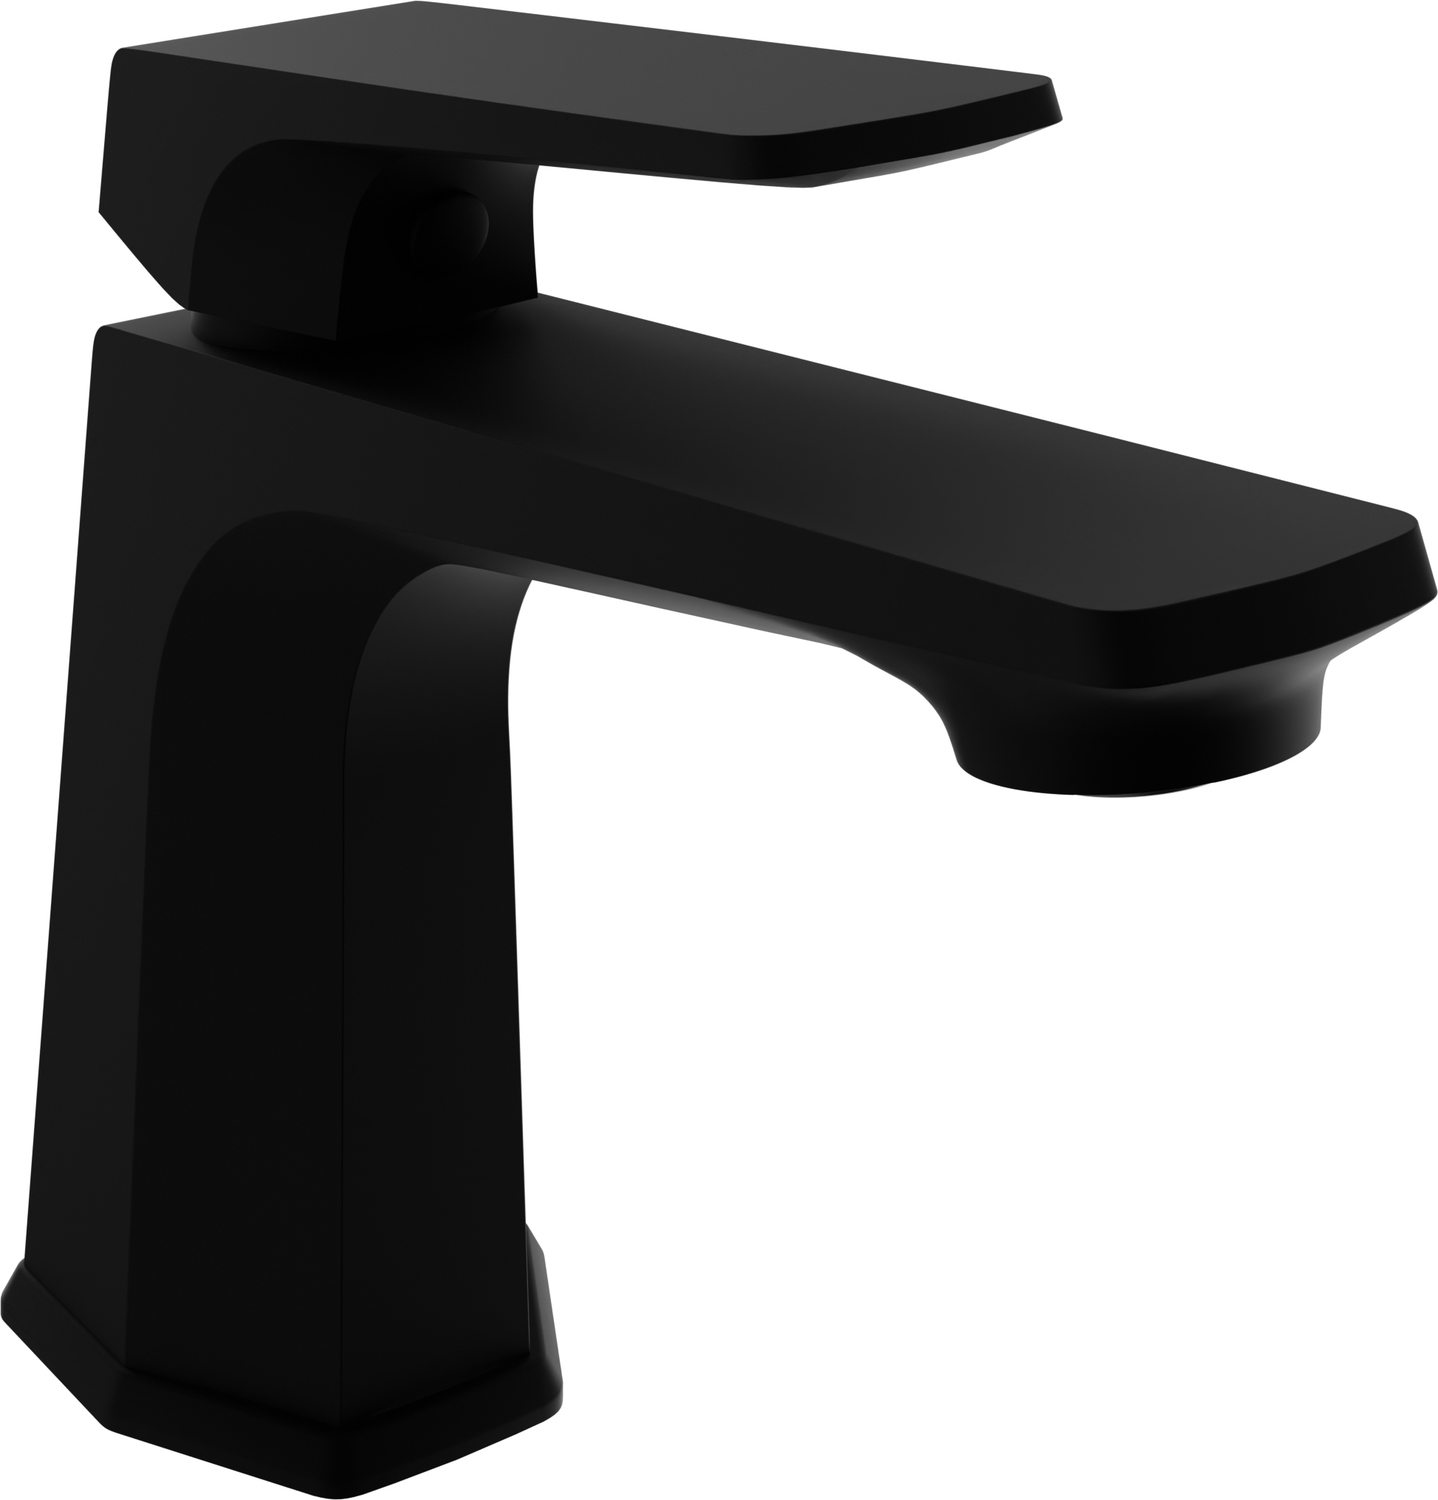 fau cet Anzzi BATHROOM - Faucets - Bathroom Sink Faucets - Single Hole Black